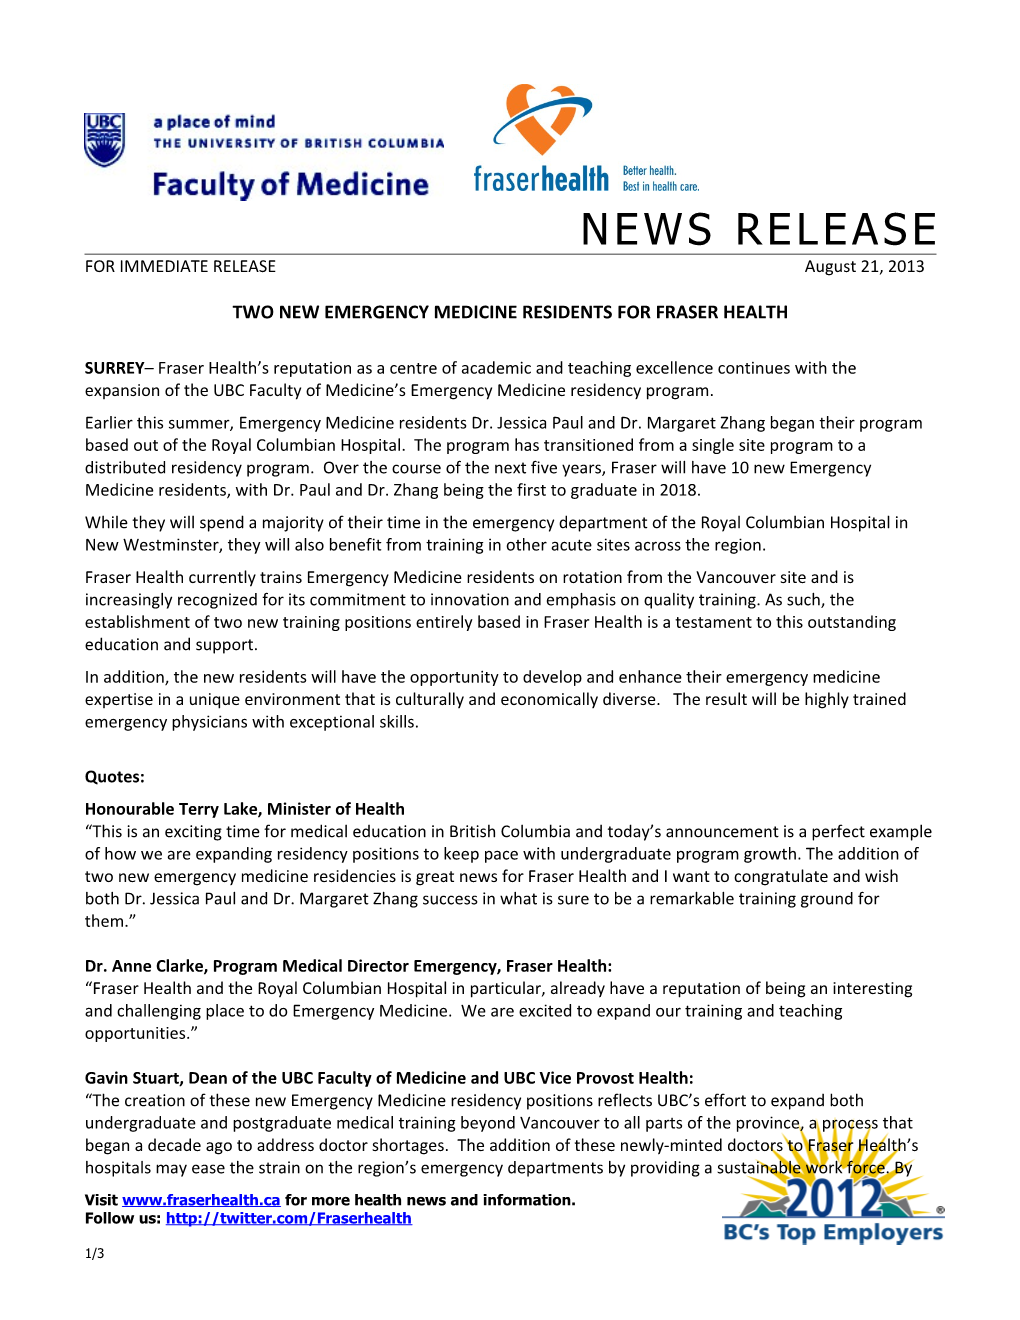 Two New Emergency Medicineresidents for Fraser Health